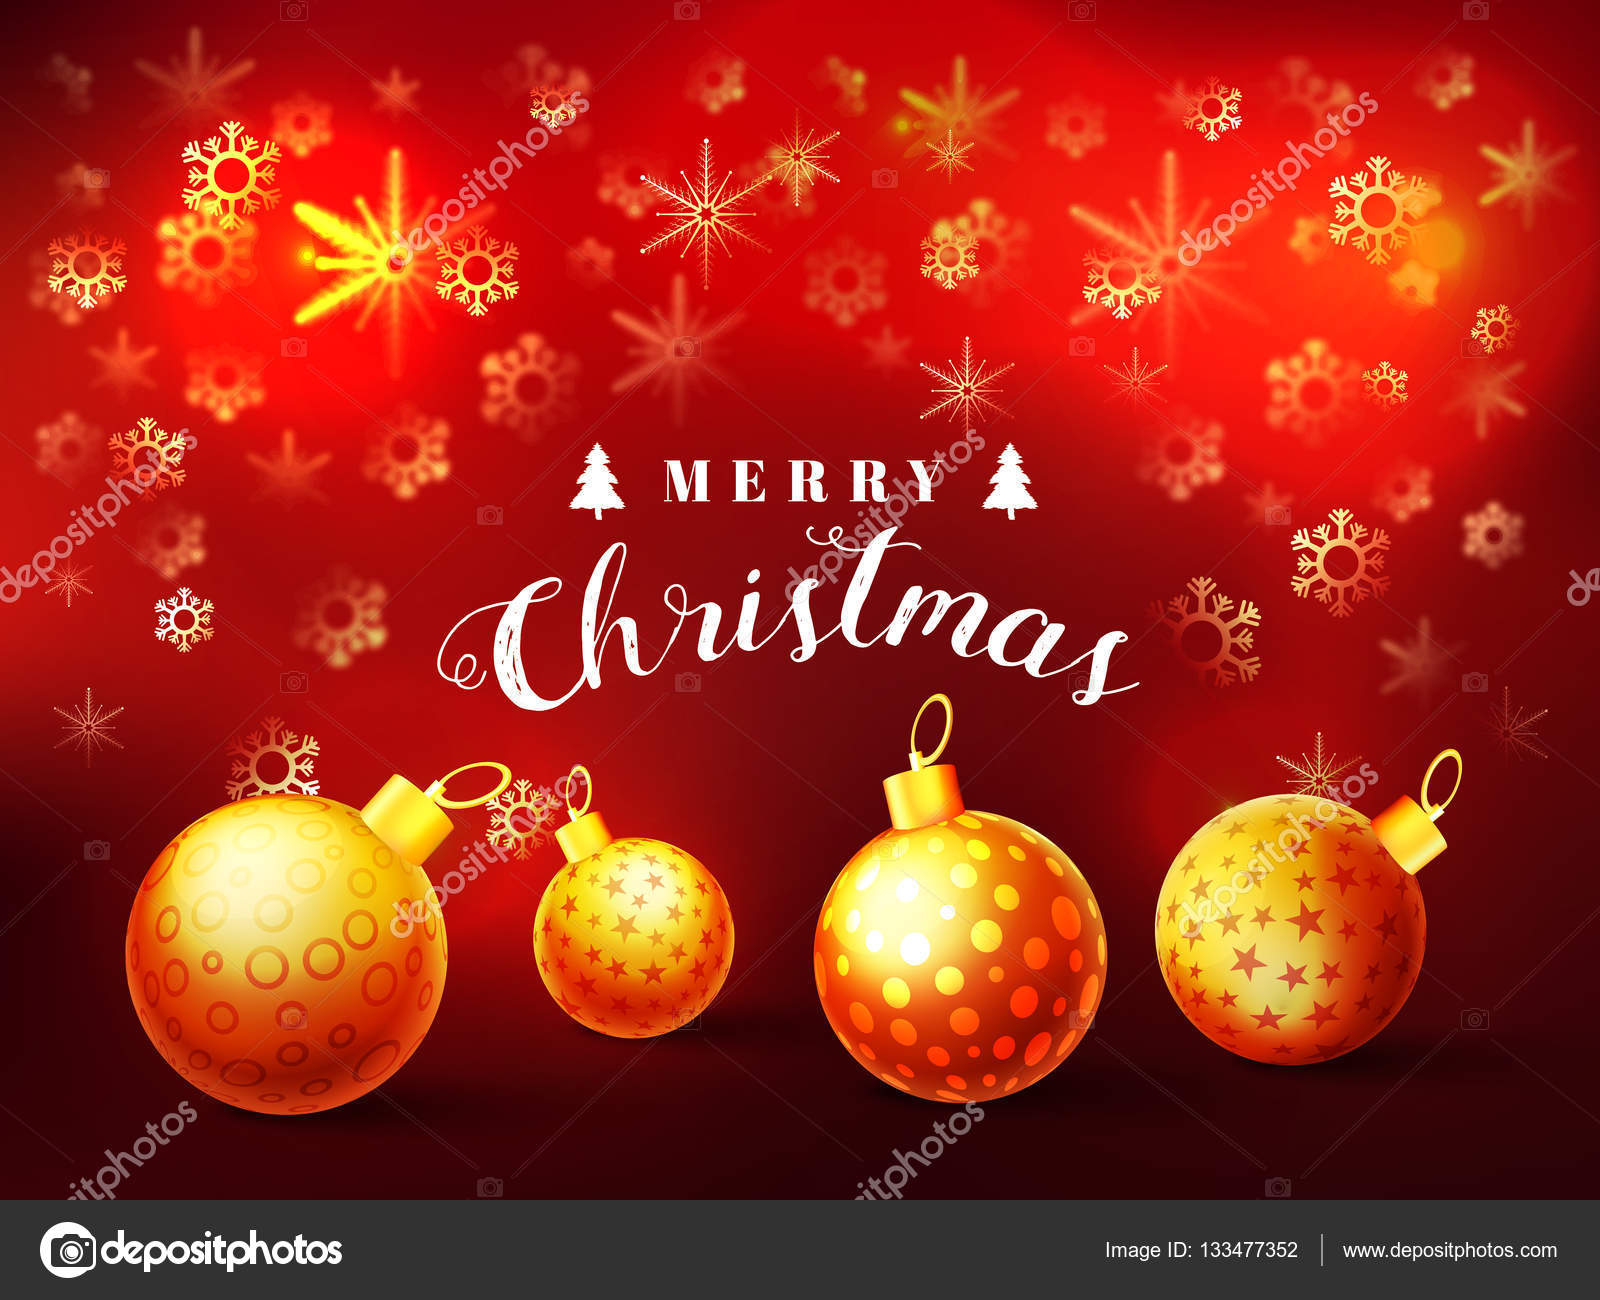 Merry Christmas Celebration Background Stock Vector C Alliesinteract 133477352